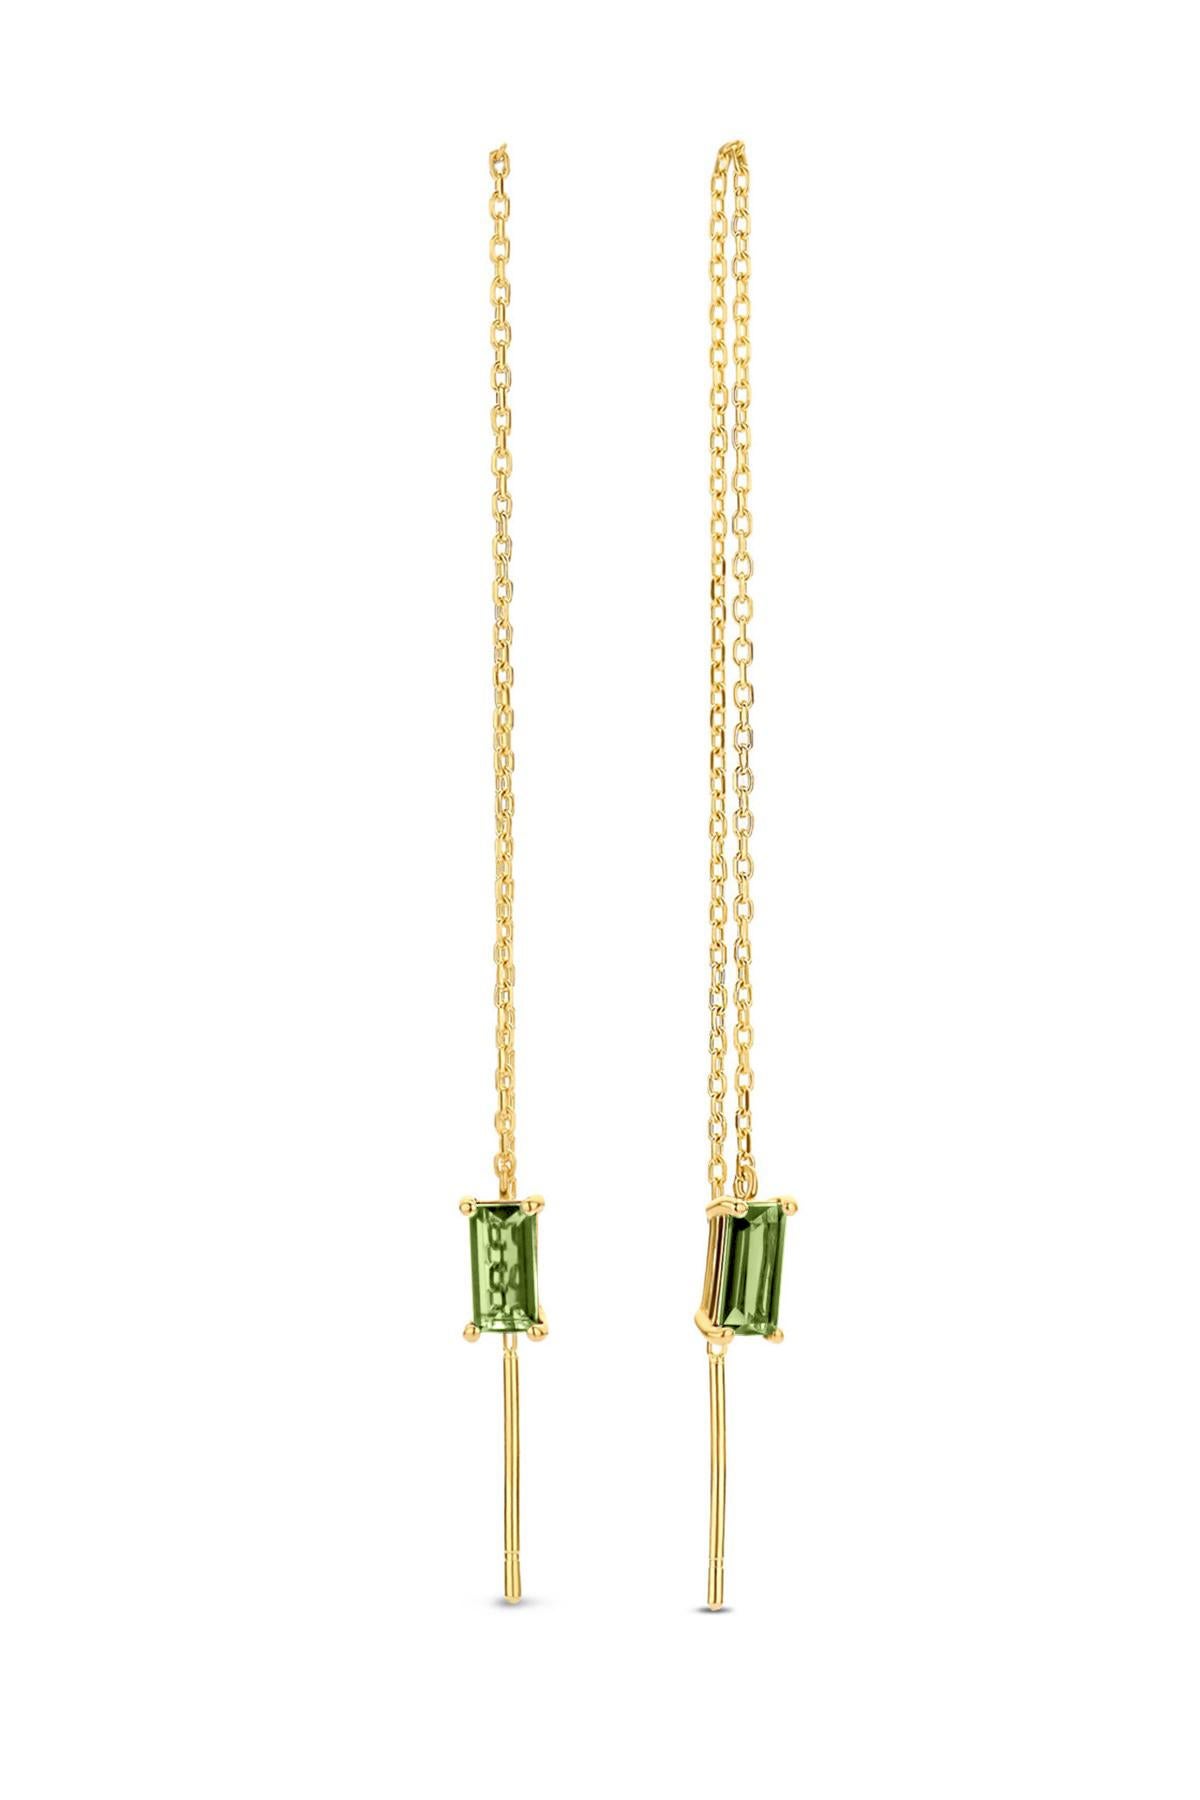 Modern 14k Solid Gold Drop Earrings with peridot.  Chain Gold Earrings For Sale